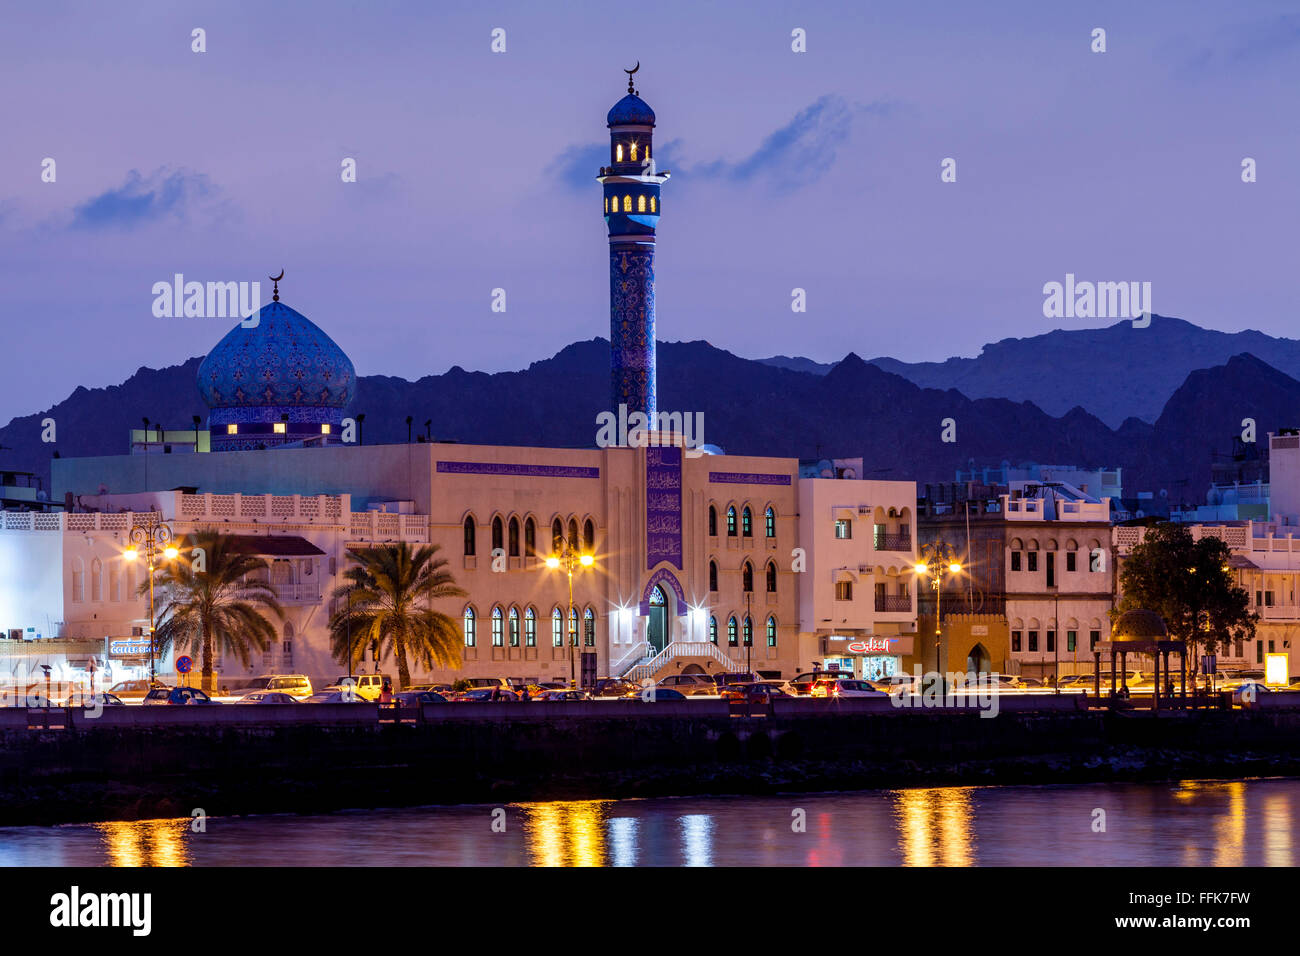 The Corniche (Promenade) and Al Lawatiya Mosque At Muttrah, Muscat, Sultanate Of Oman Stock Photo